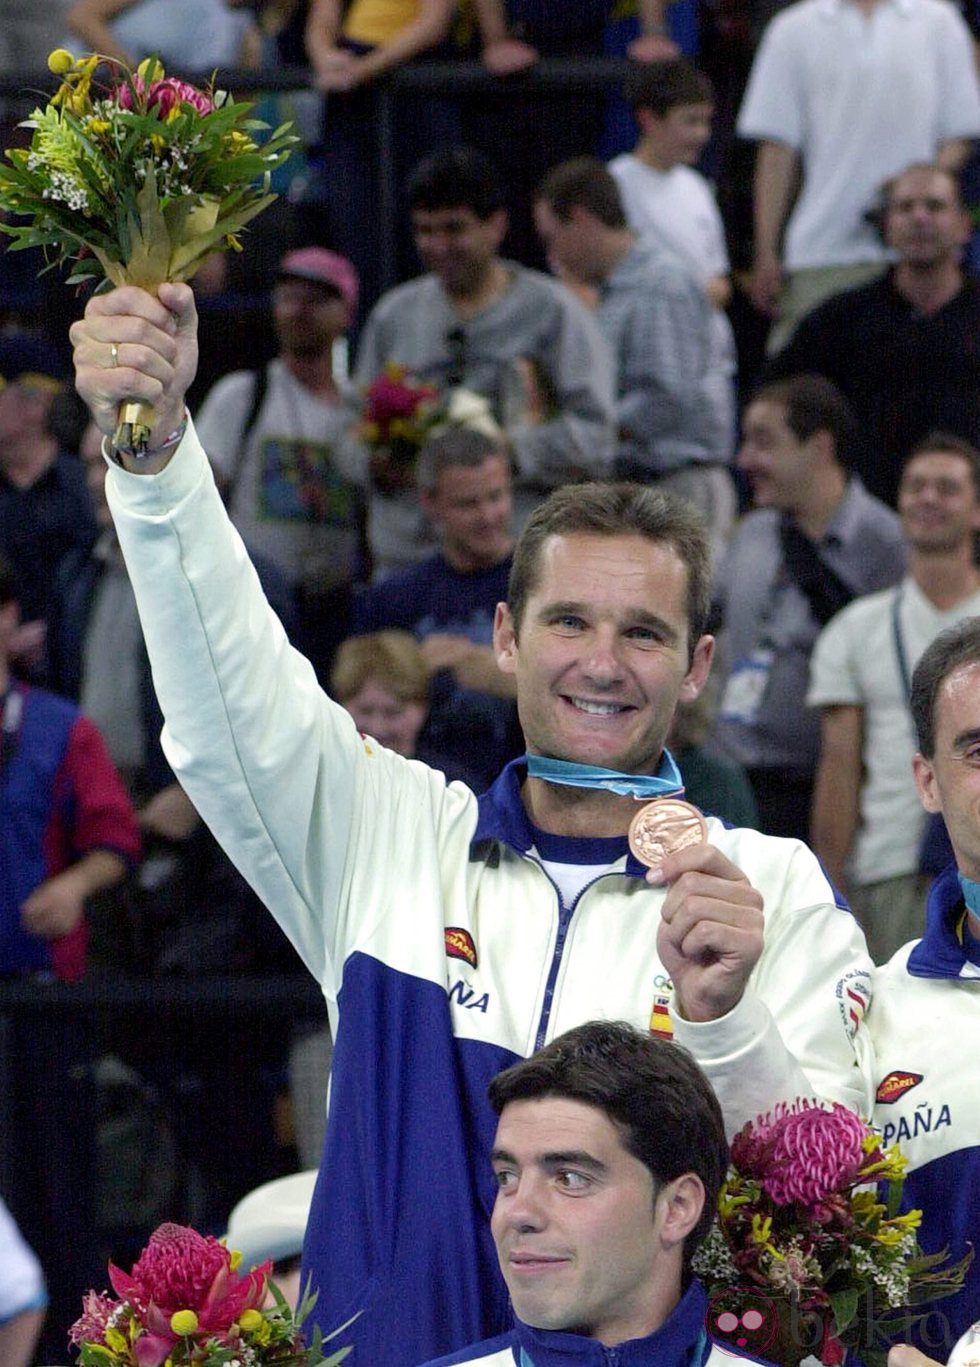 Iñaki Urdangarín, ganador de un bronce en Sidney 2000